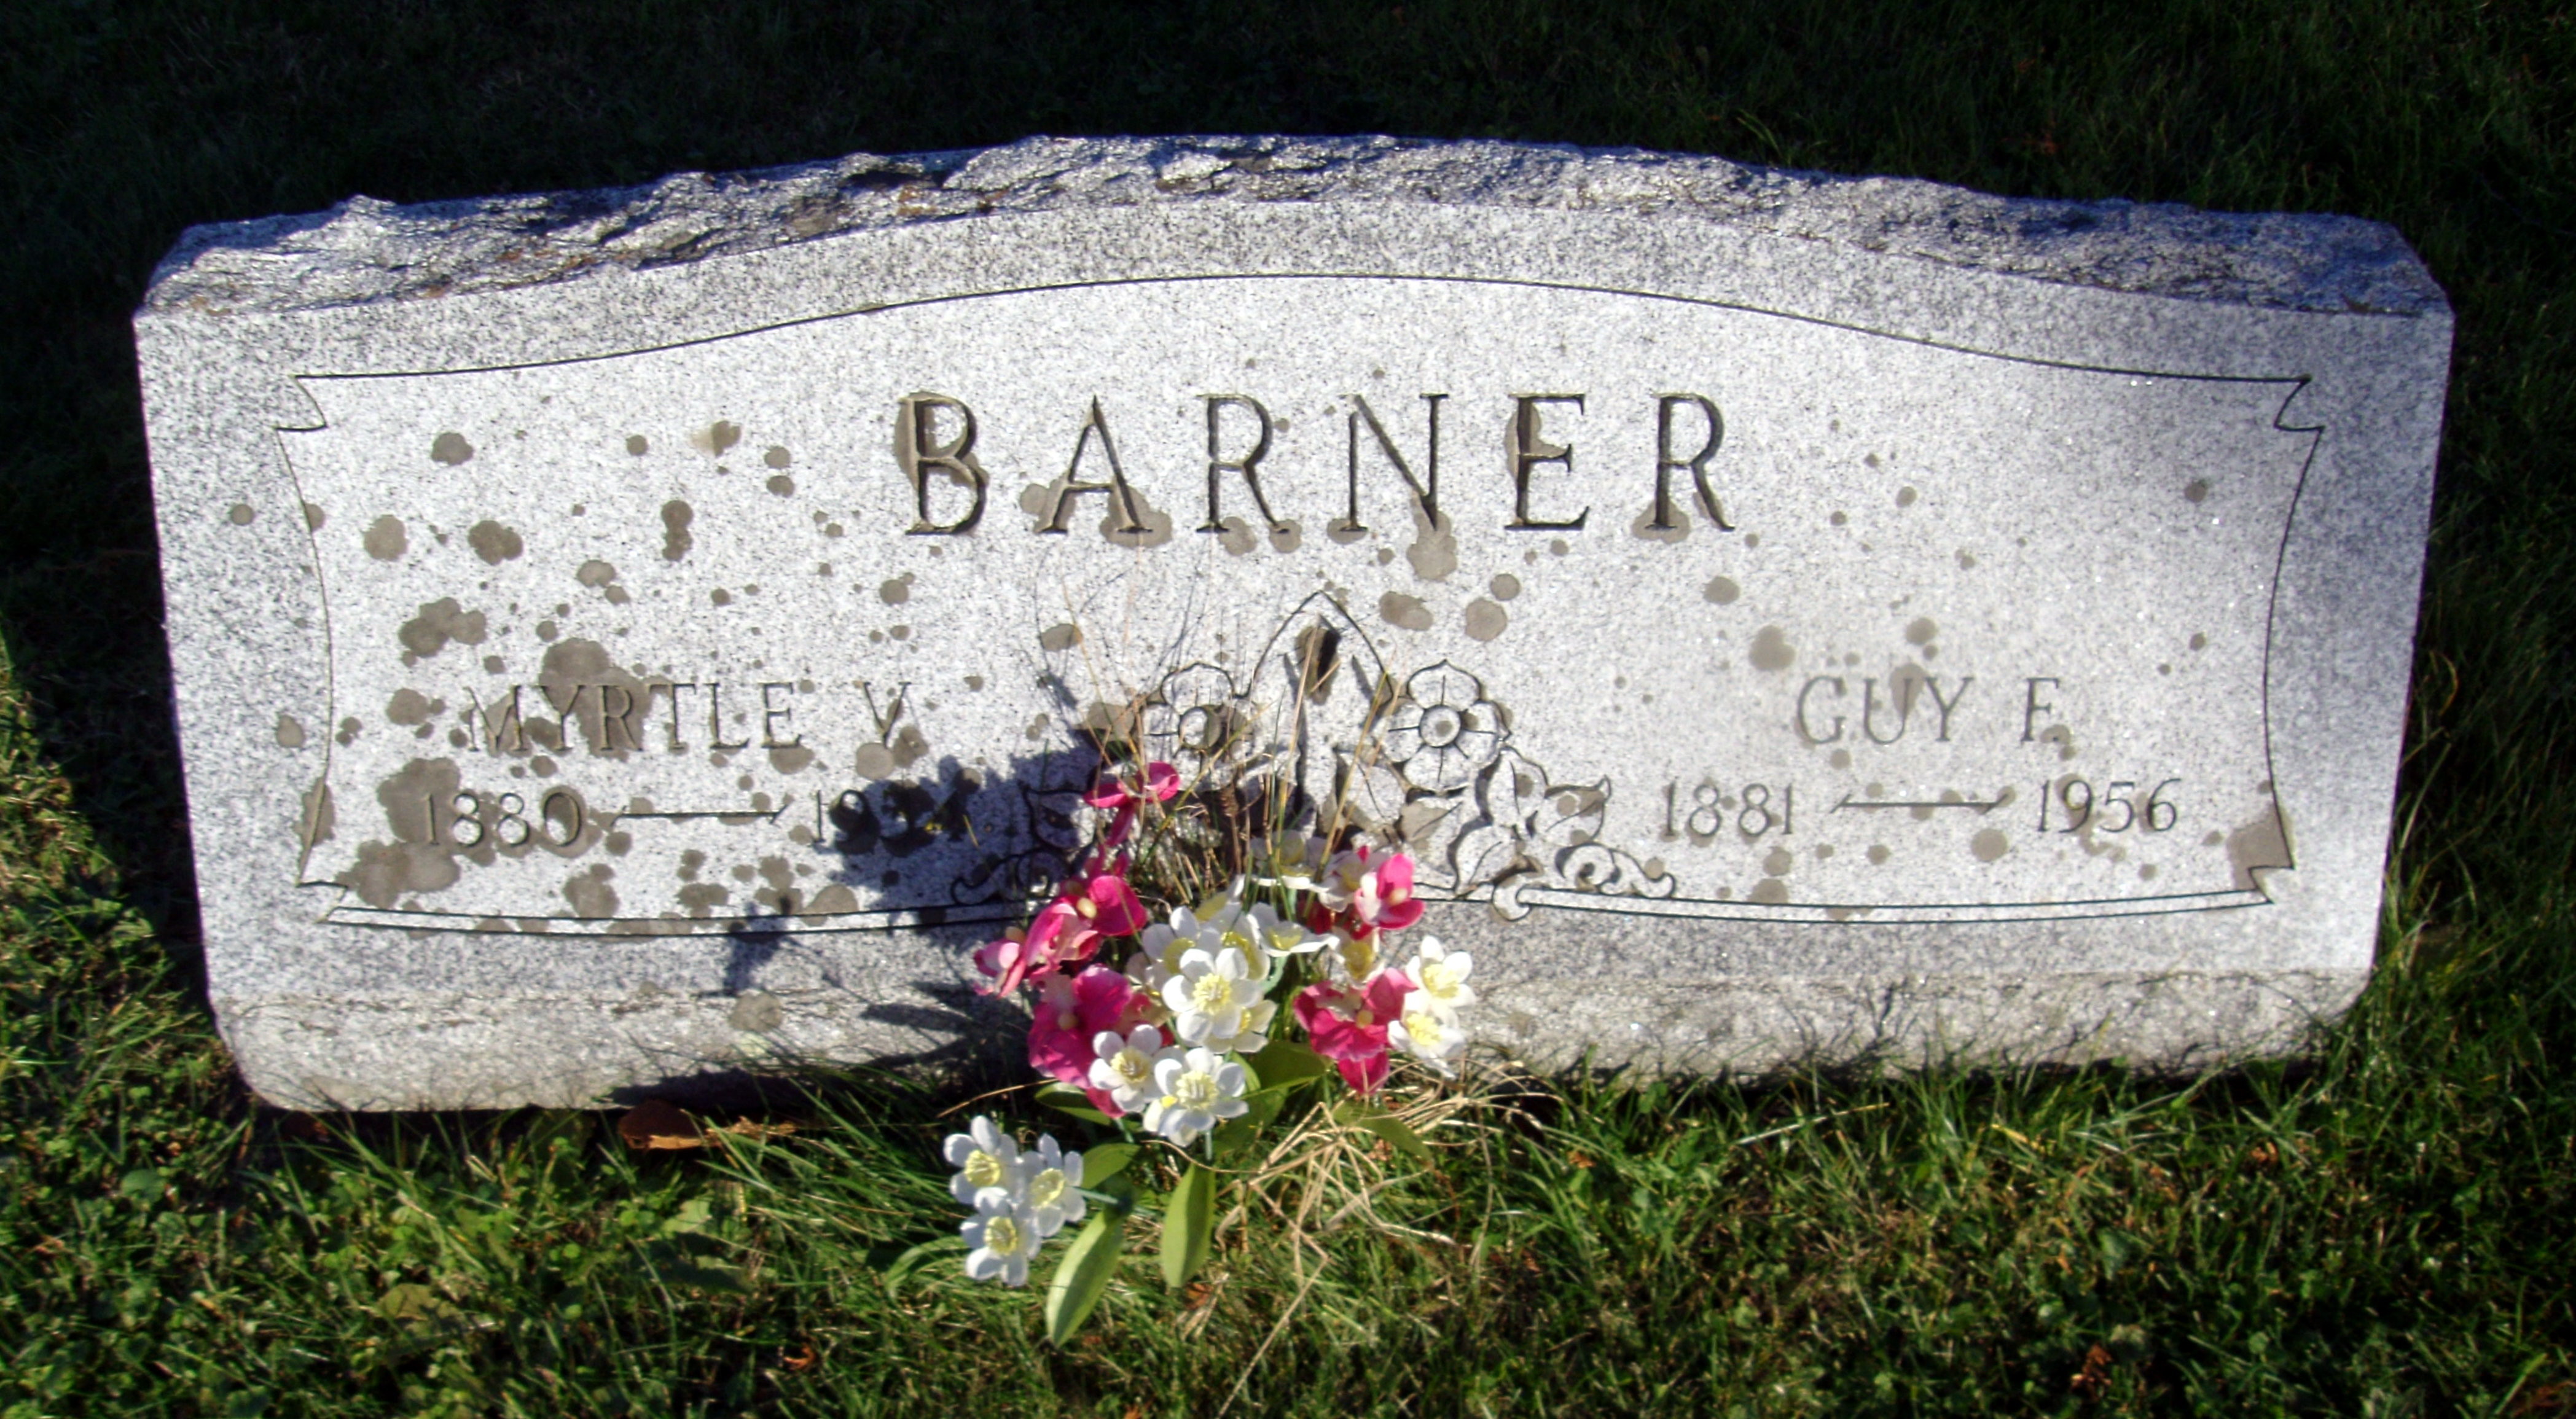 Guy Fountain Barner 1881–1956